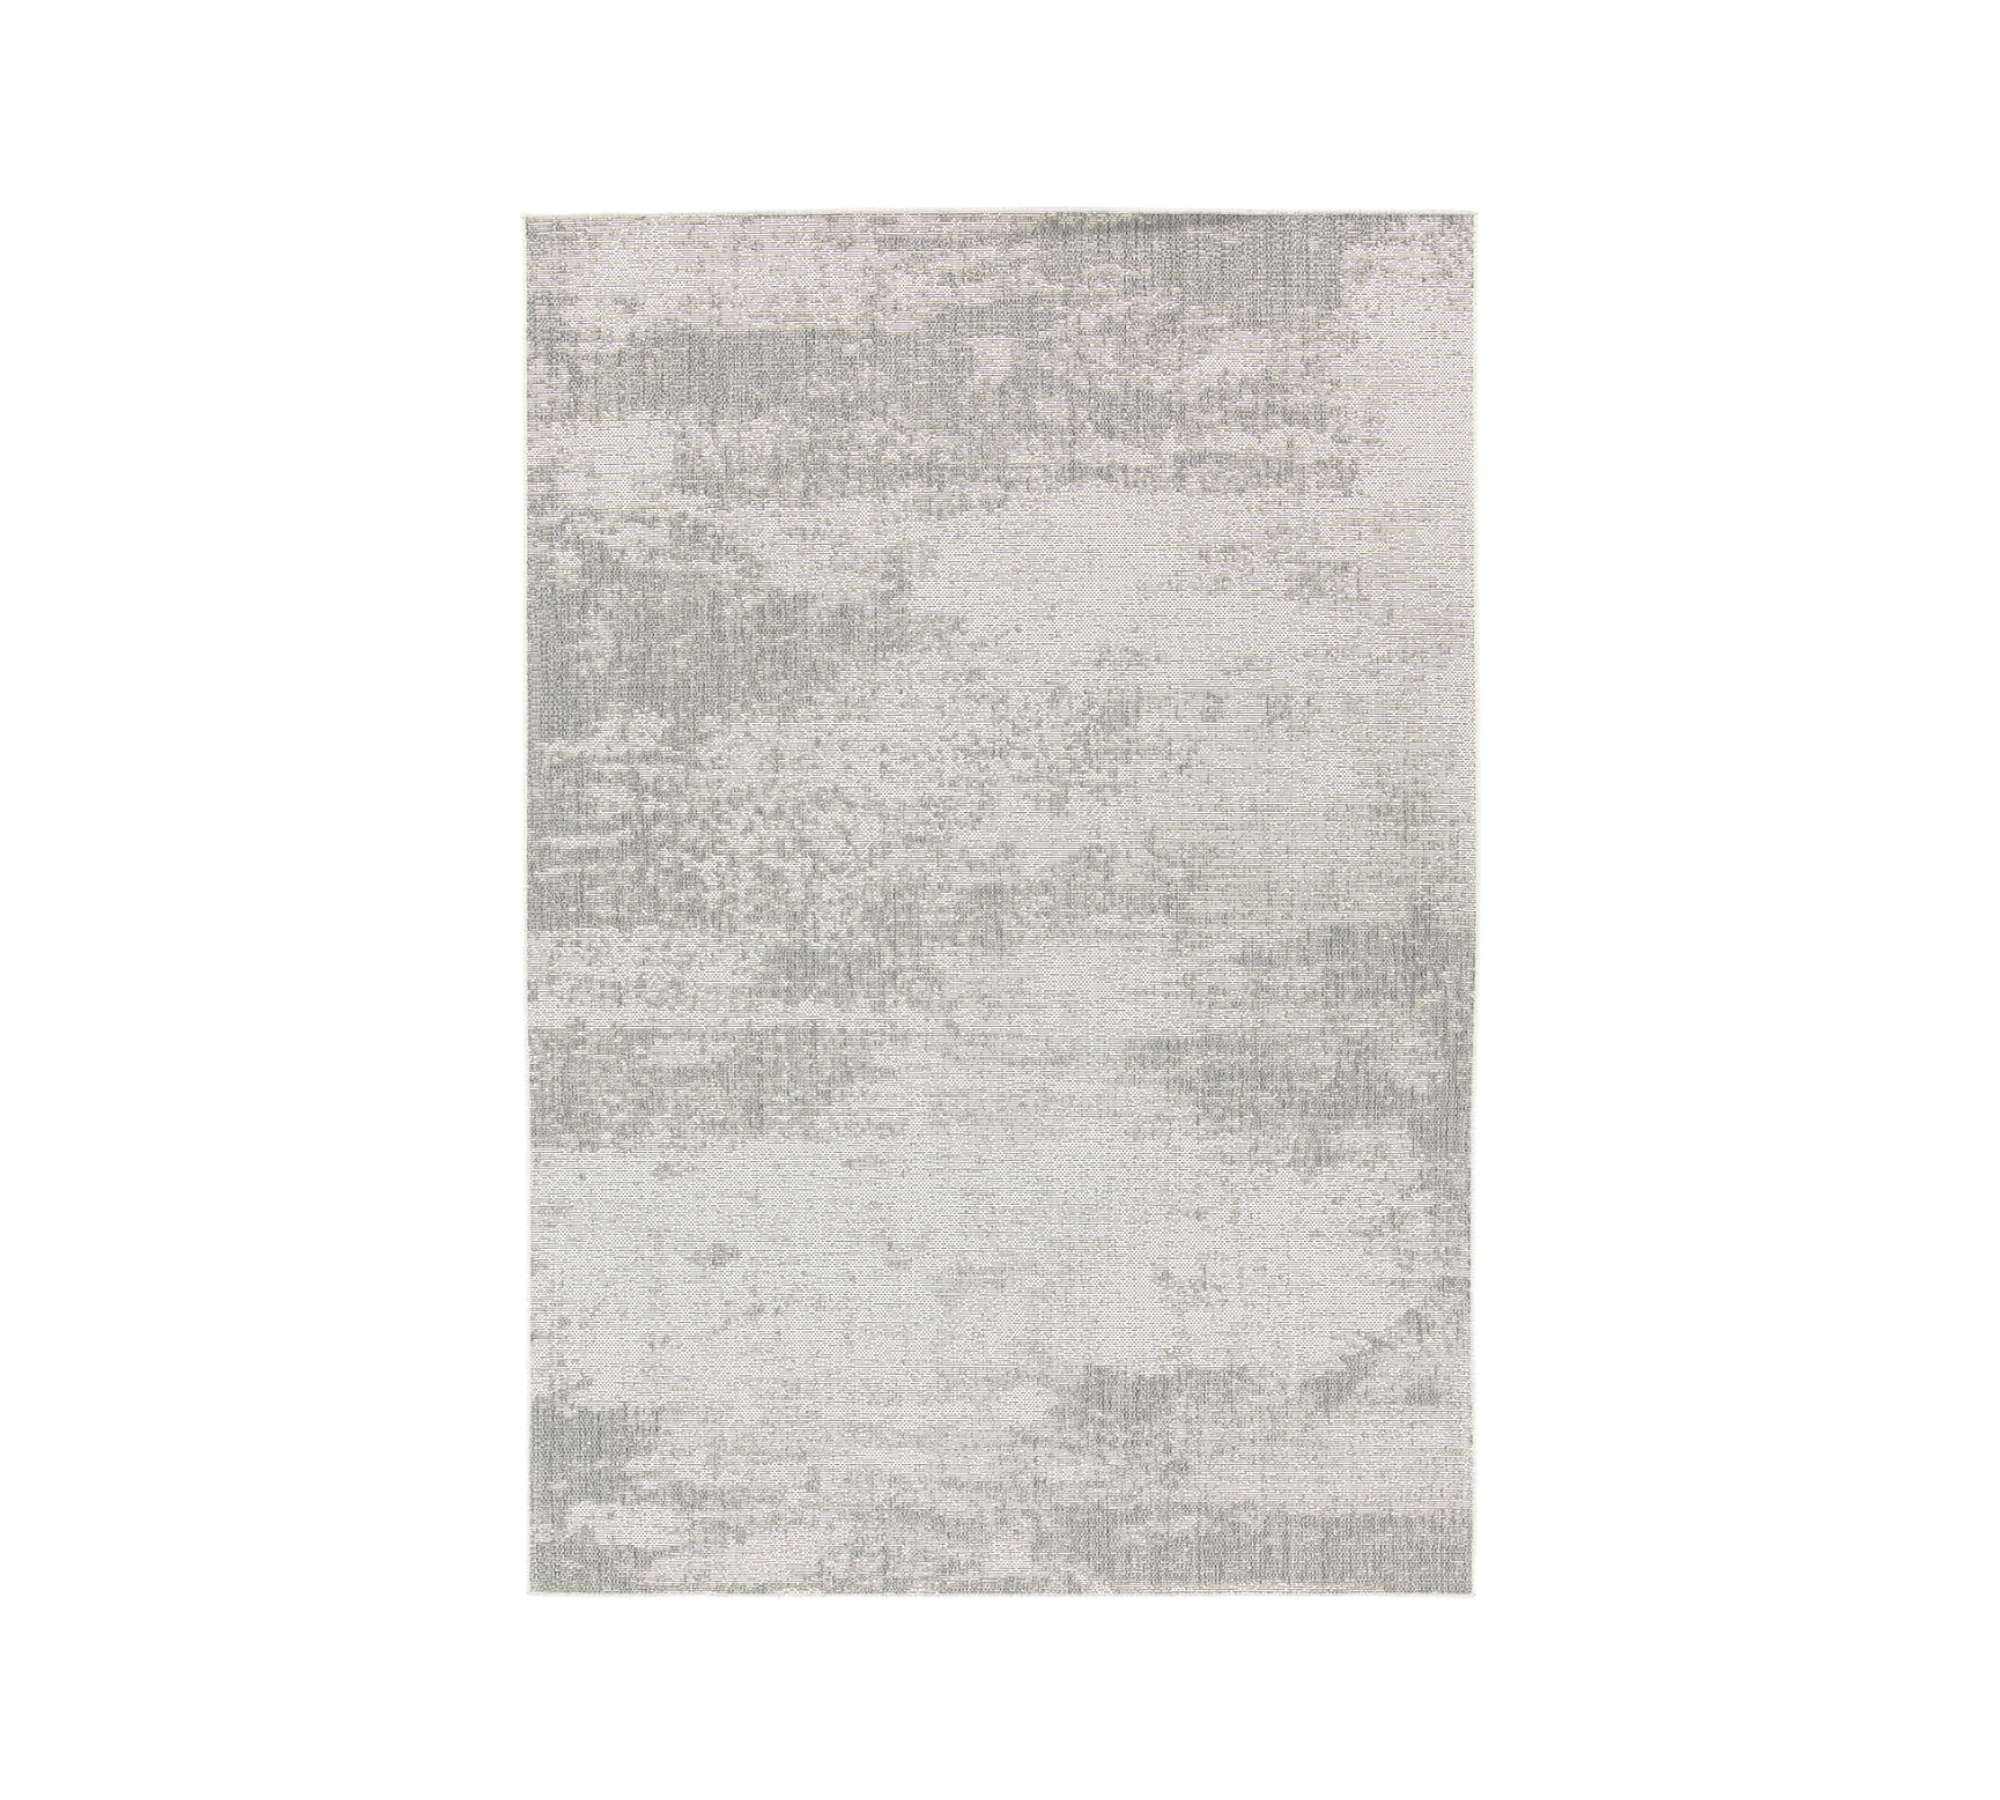 Outdoorteppich Textil Silber Grau